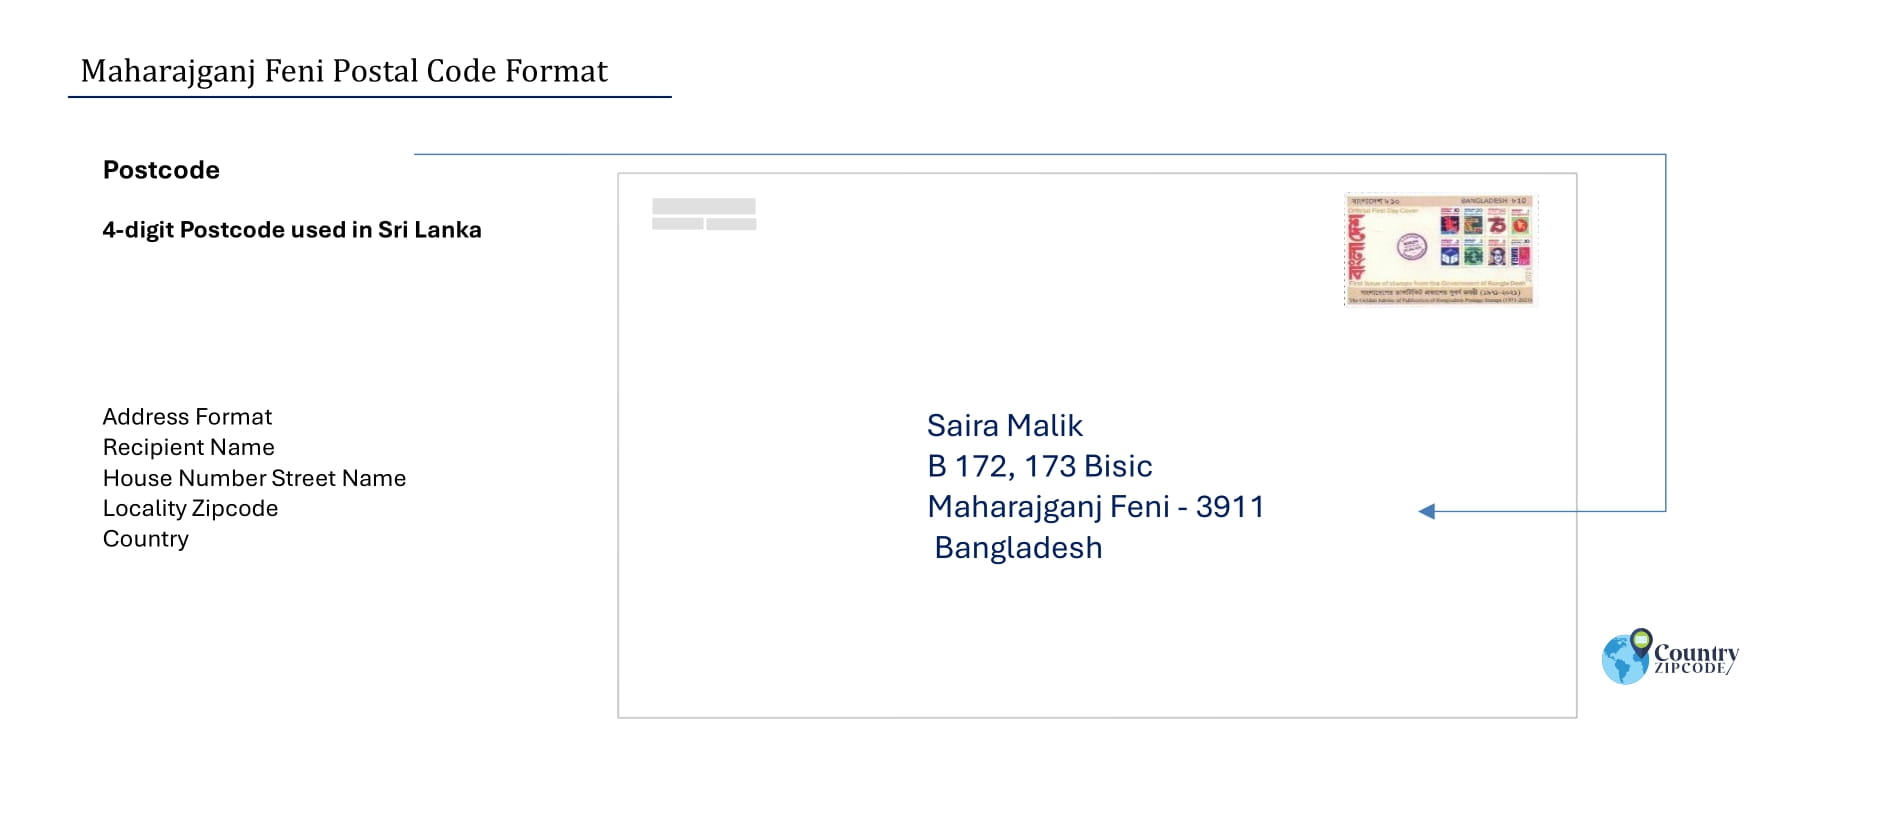 Maharajganj Feni Postal code format